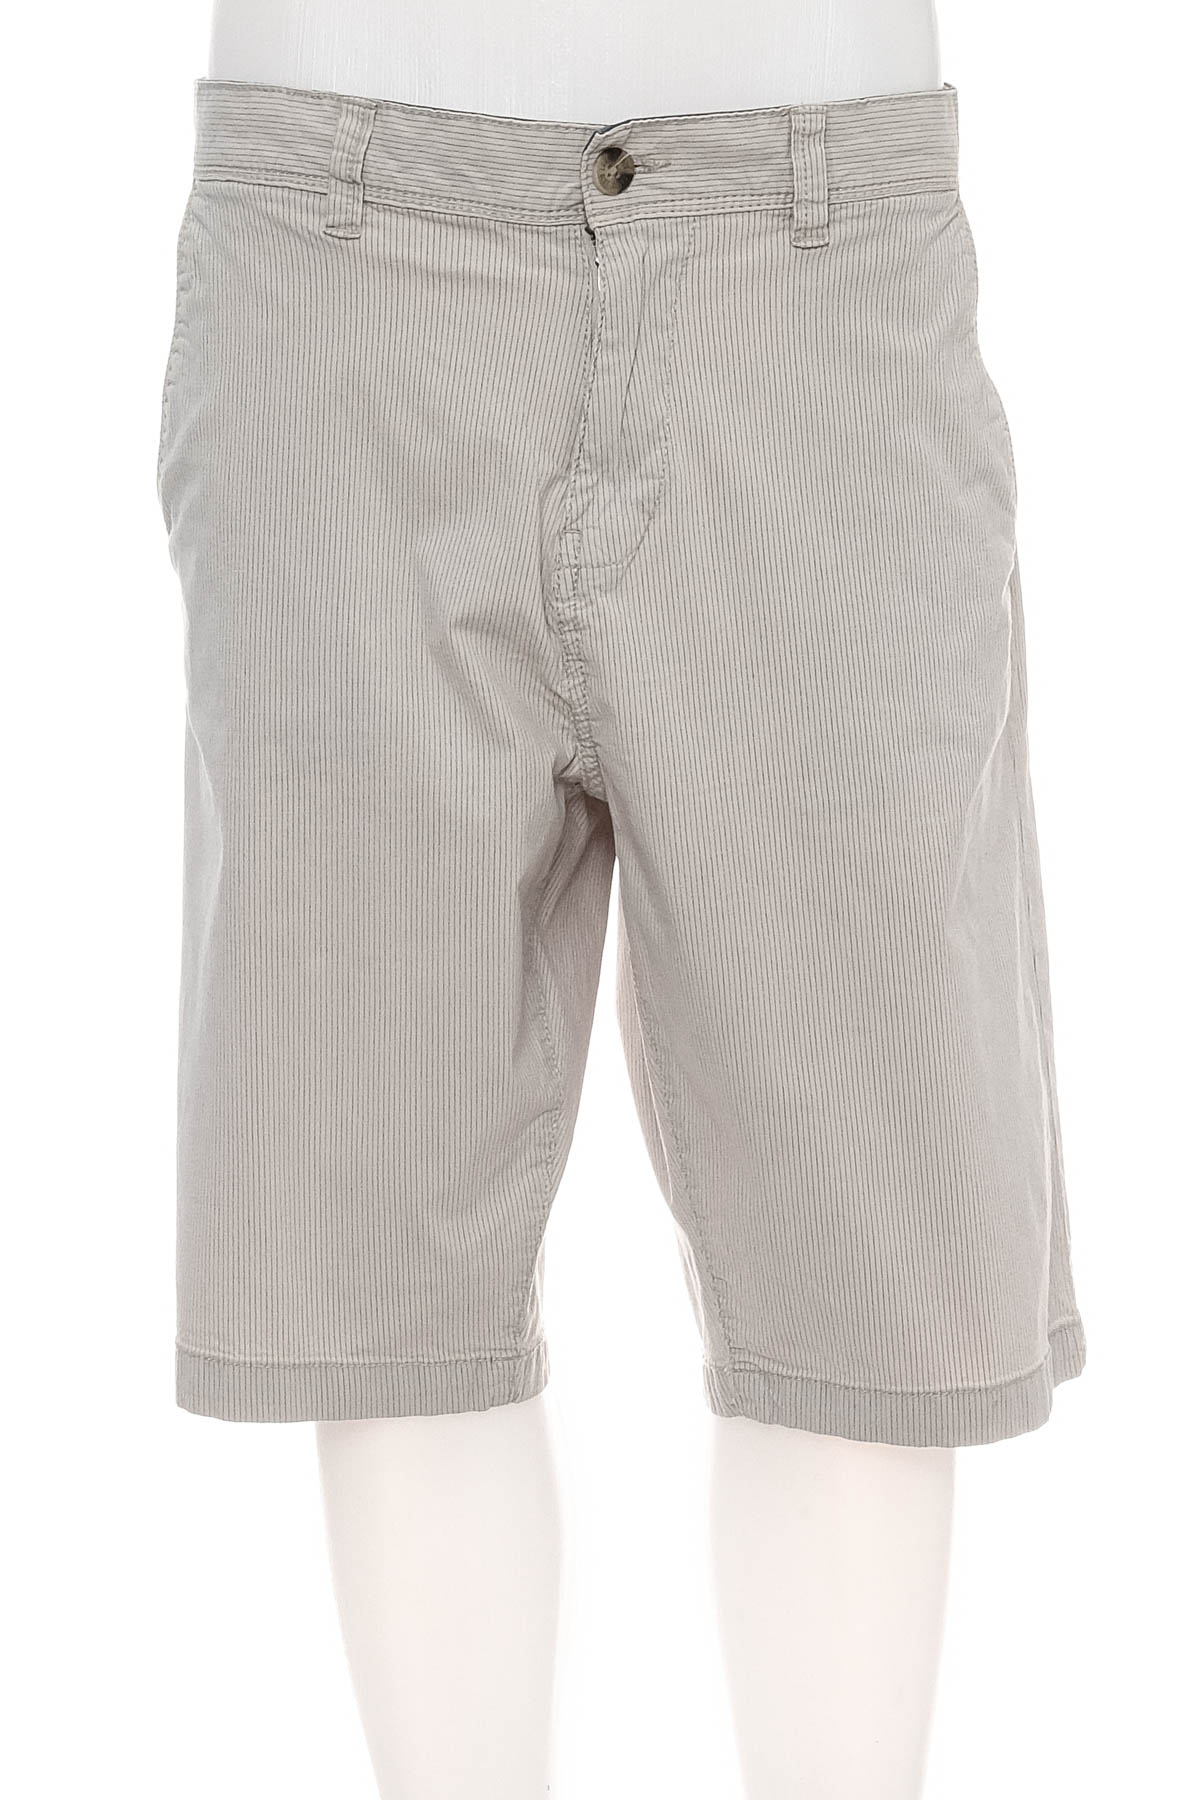 Men's shorts - Lerros - 0